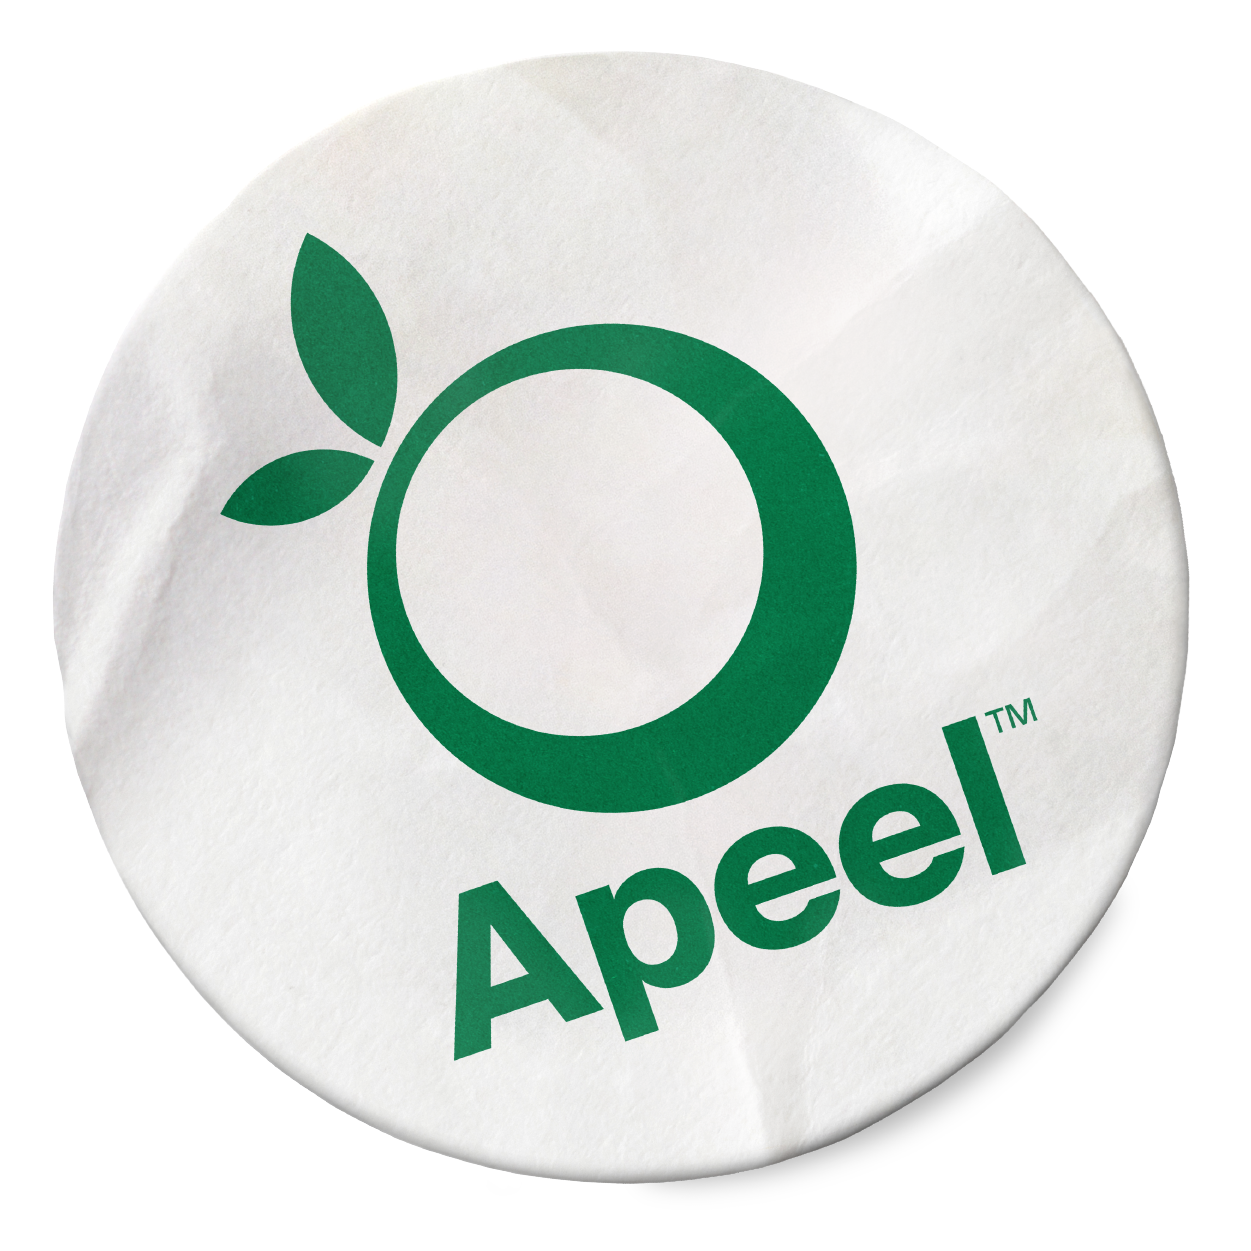 Apeel Sciences